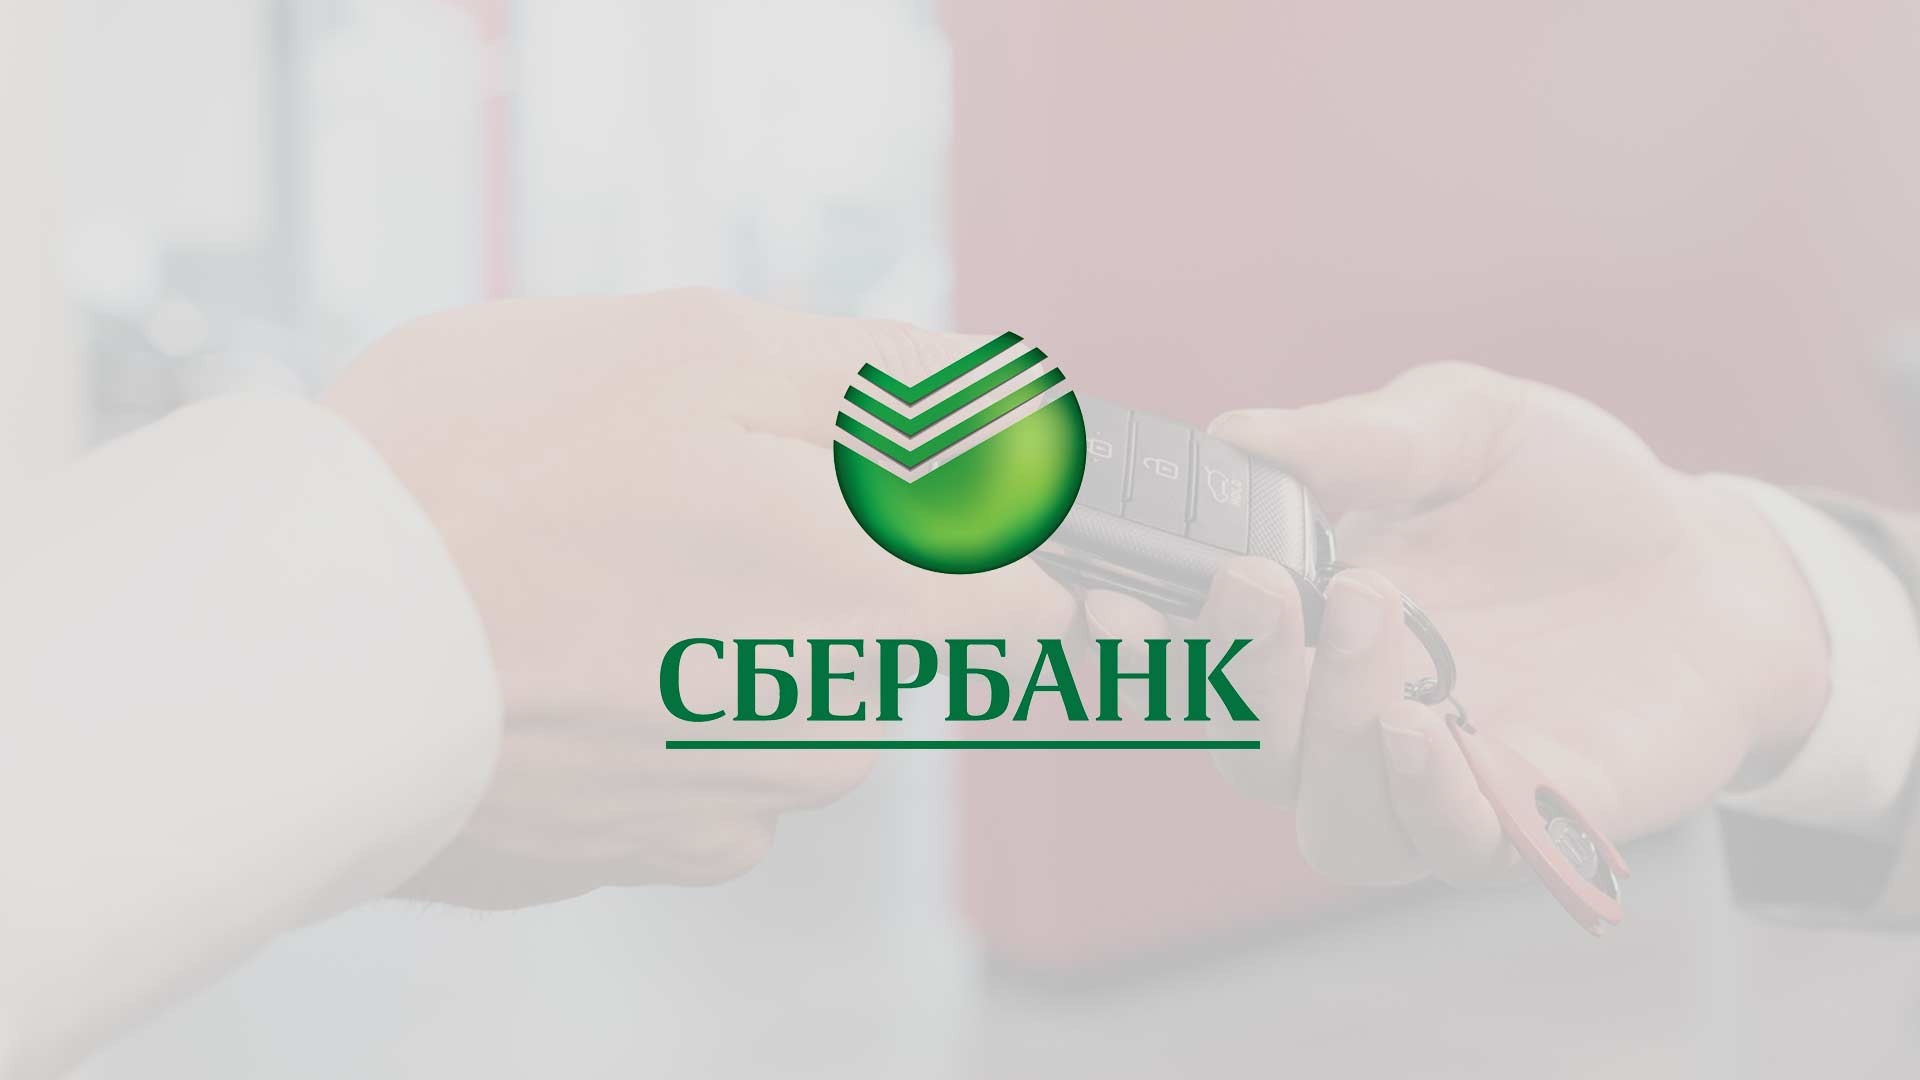 Sberbank (Сбербанк)